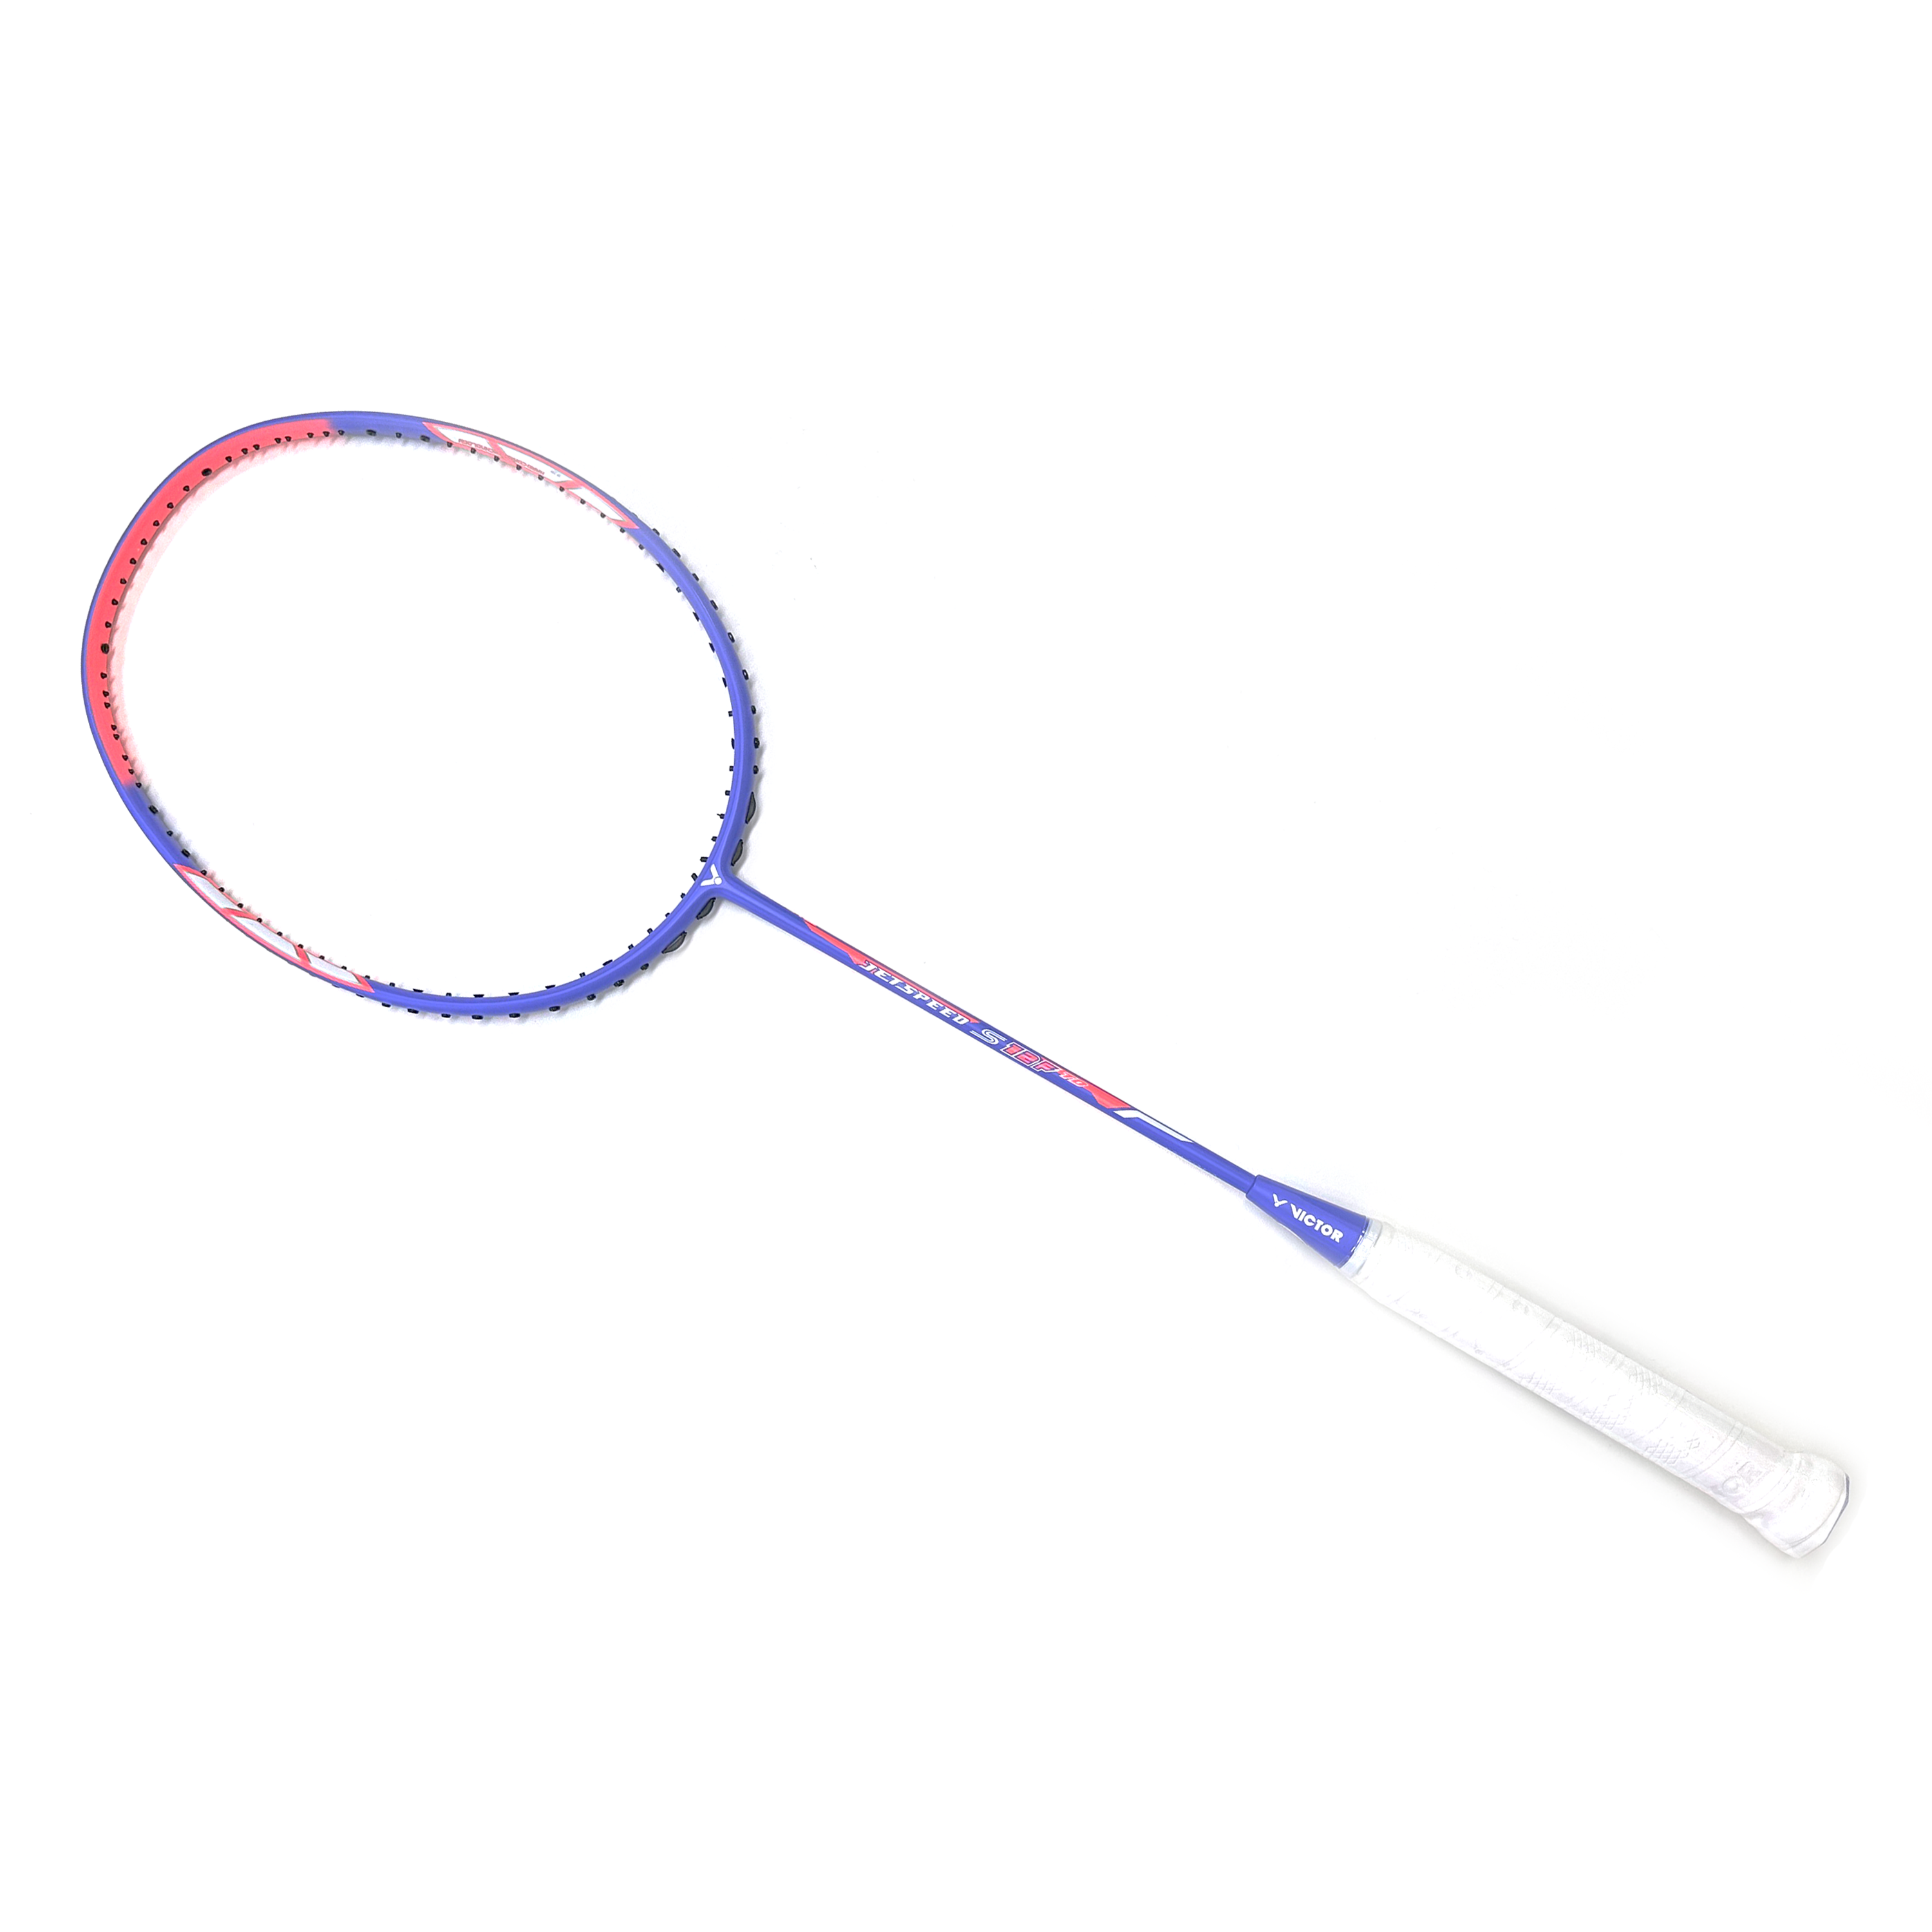 Victor Jetspeed S 12F TD Badminton Racquet 4U(83g)G6